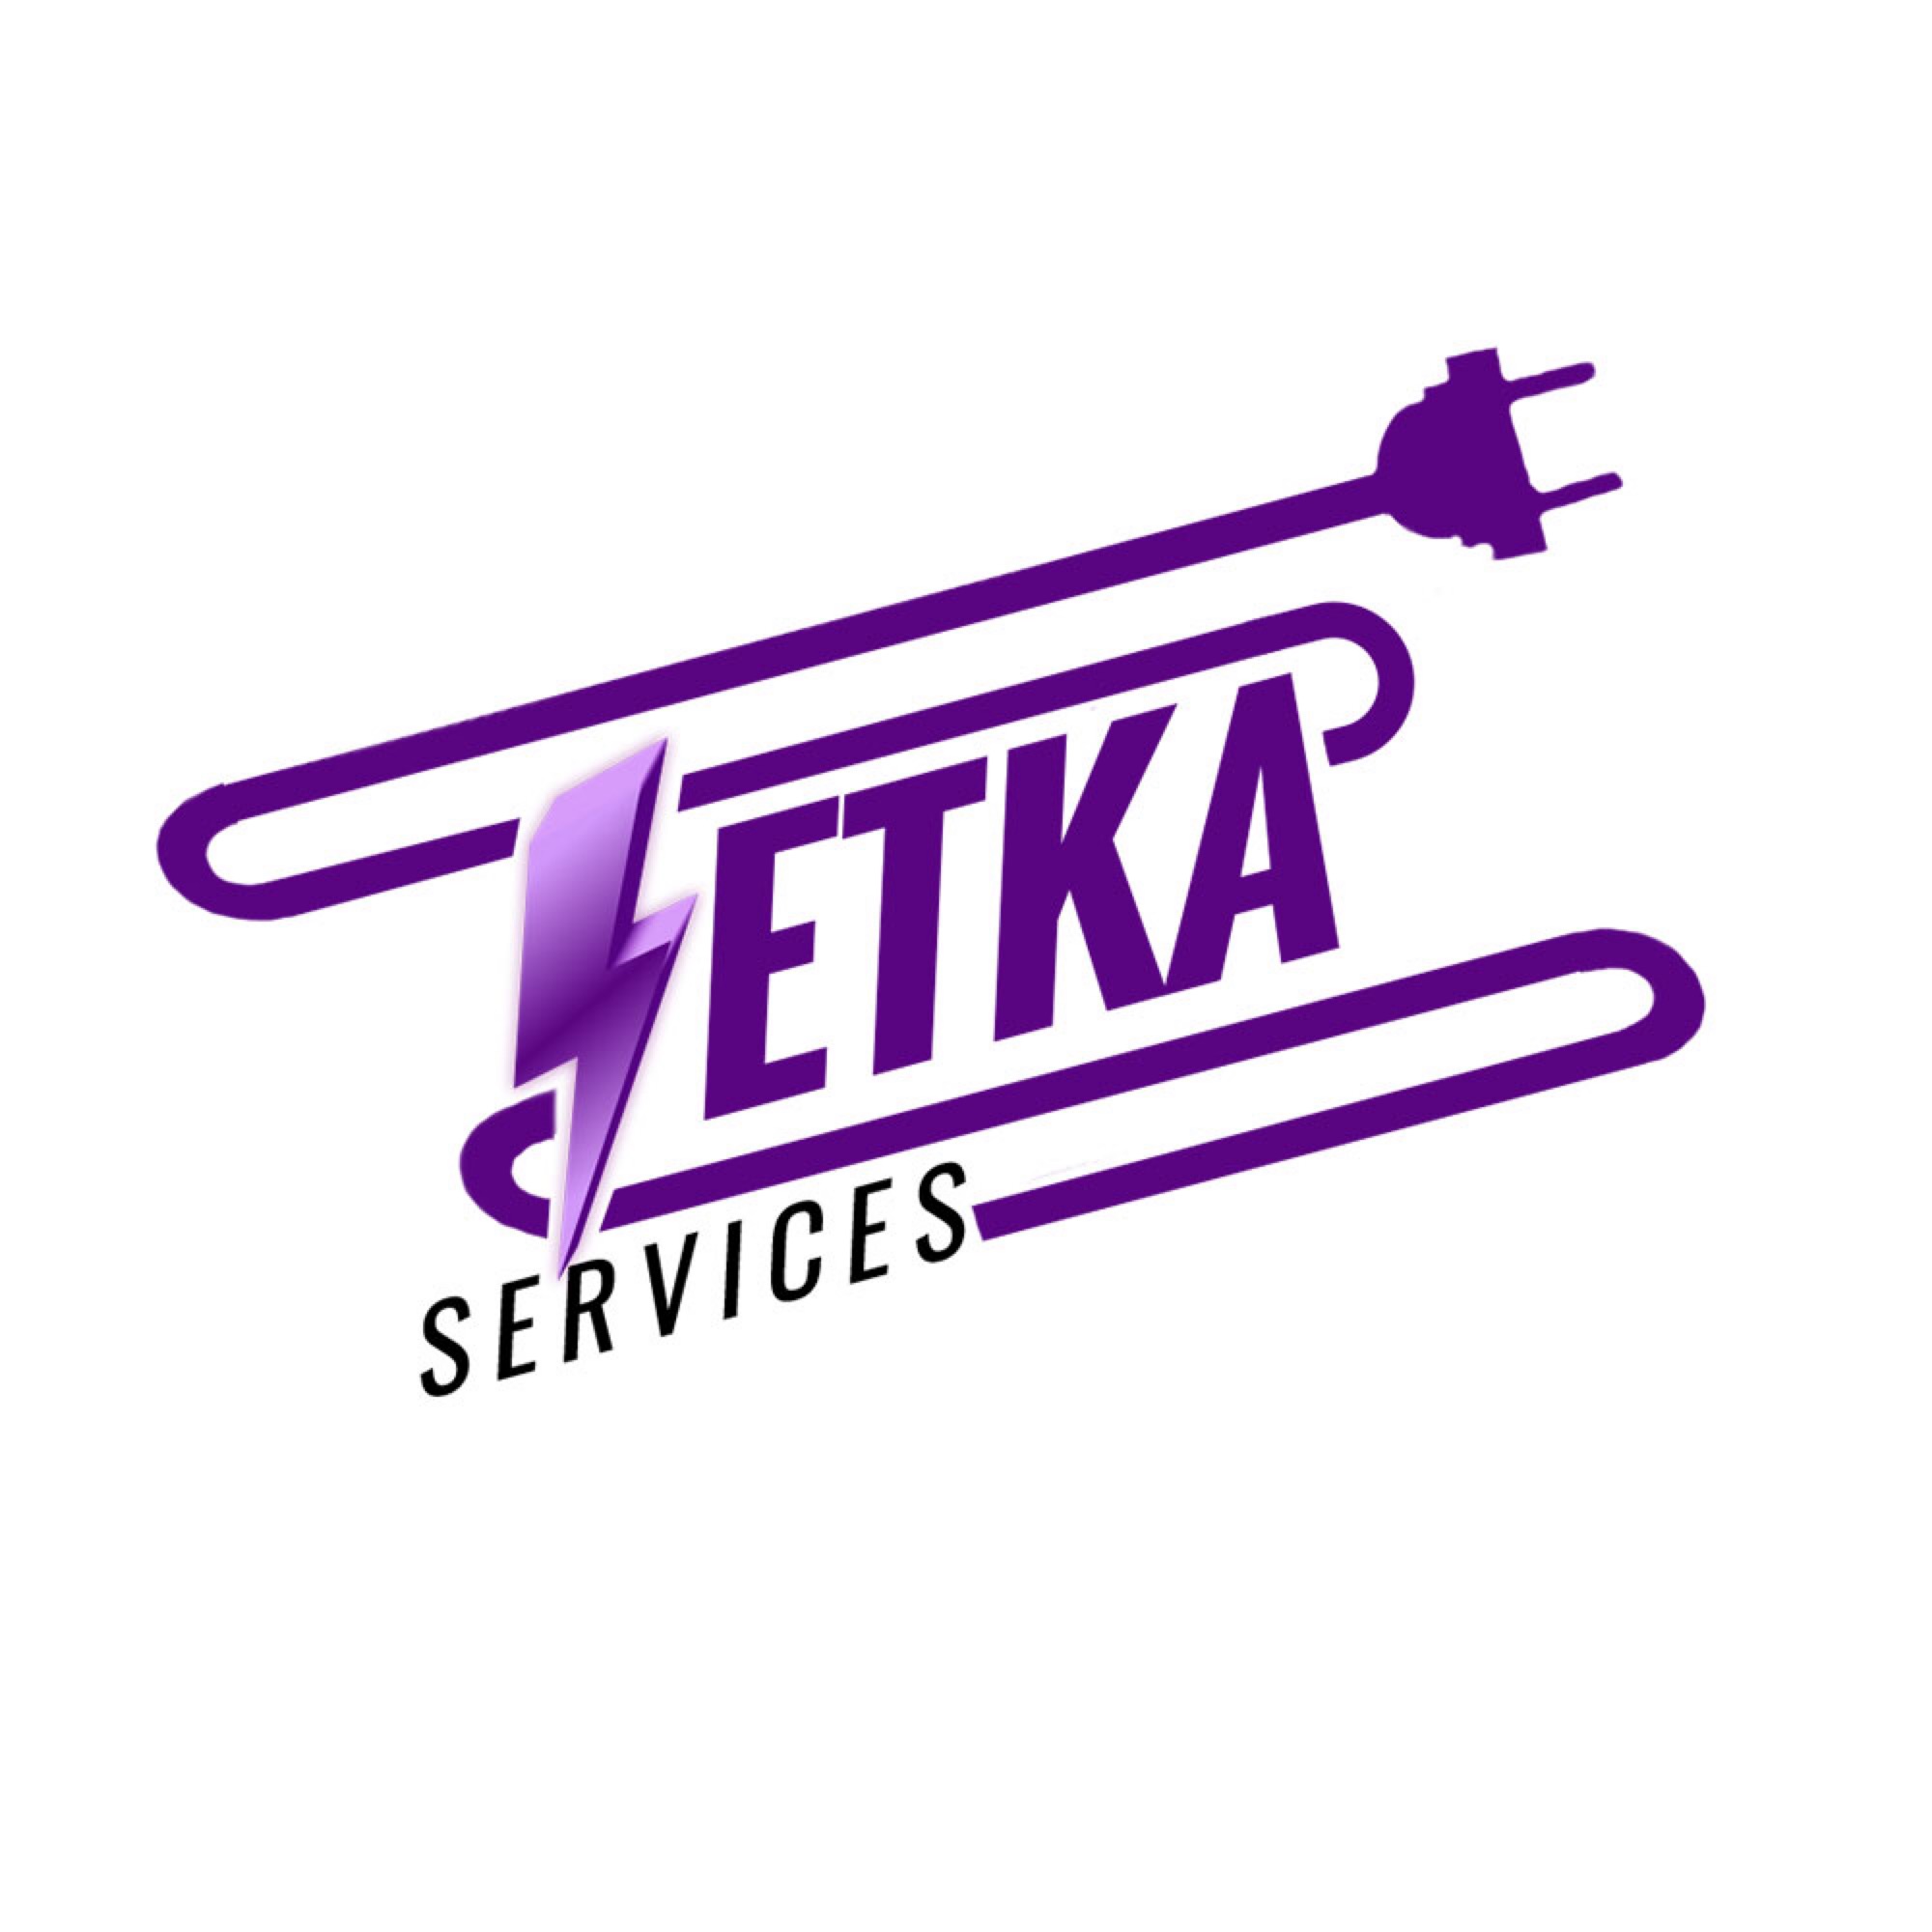 Ietka Services Logo